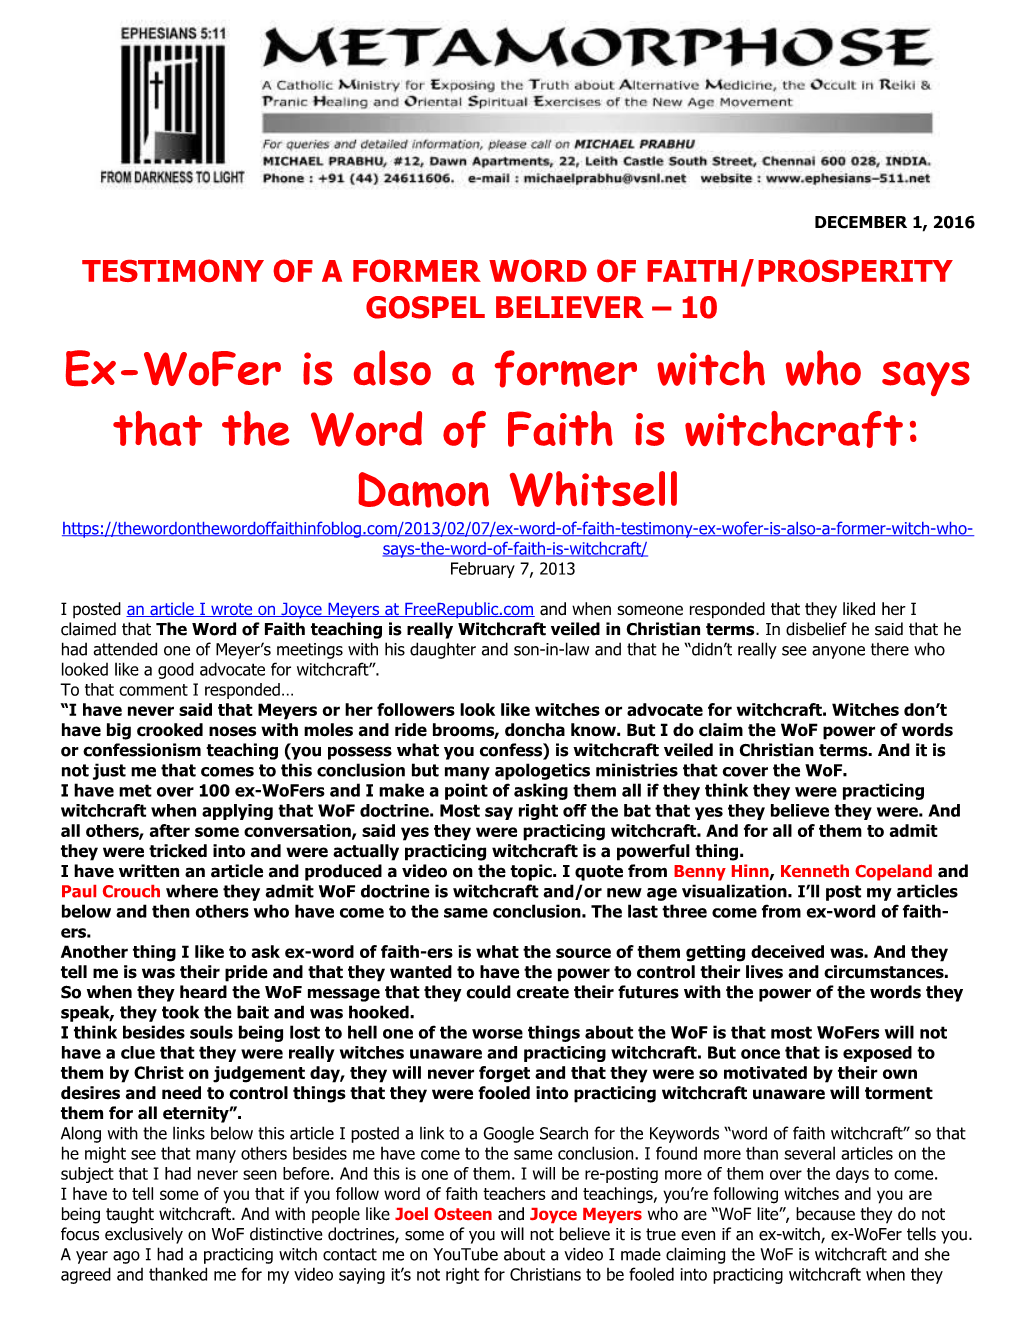 Testimony of a Former Word of Faith/Prosperity Gospel Believer 10